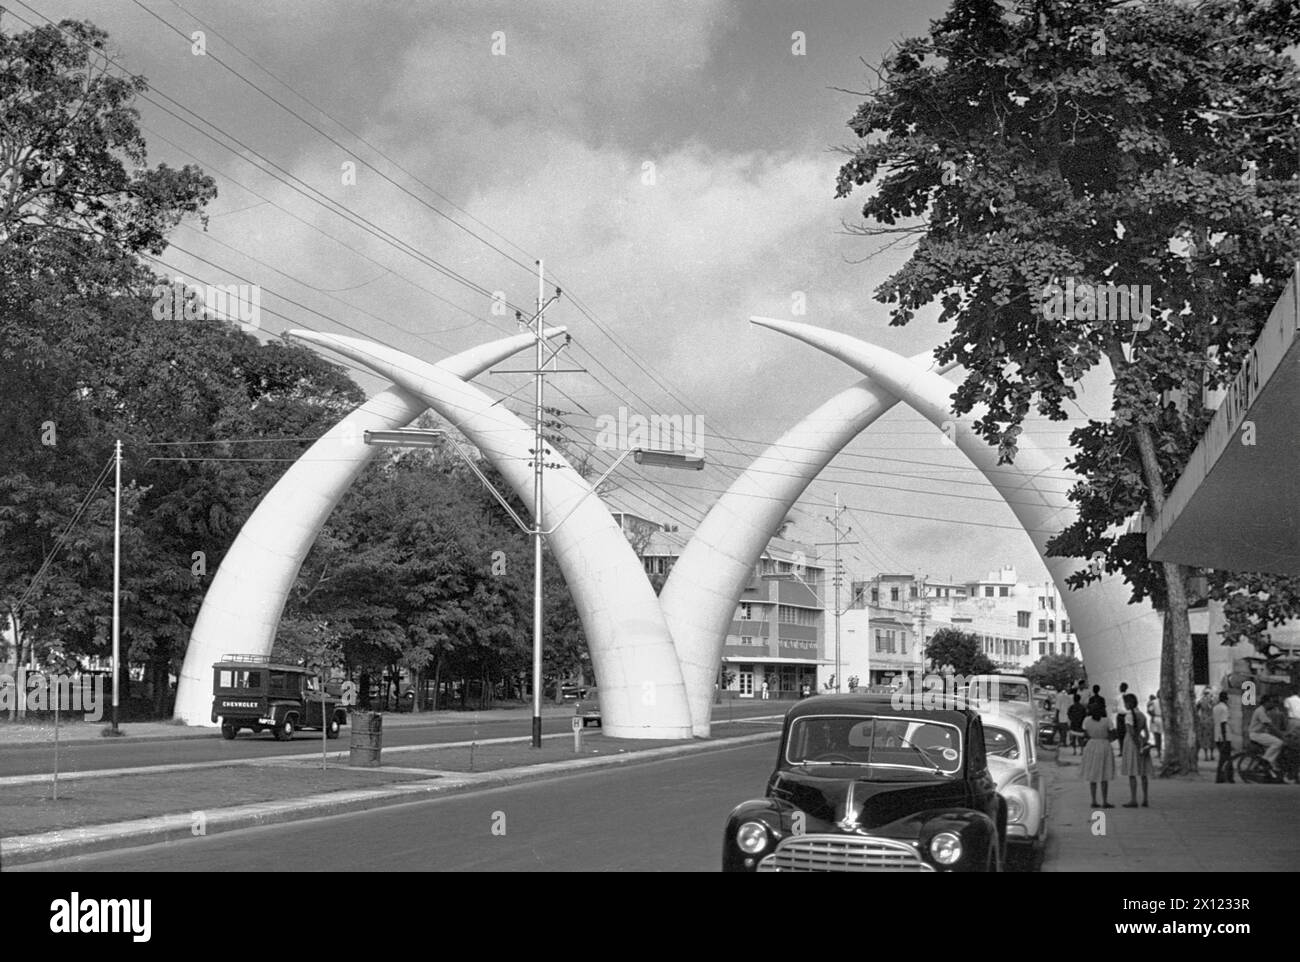 The Mombasa Tusks, Mapemba ya Ndovu or Pembe za Ndovu, a Giant Elephant Tusks Archway or Monument, originally built in 1952, on Moi Avenue Mombasa Kenya. Vintage or Historic Monochrome or Black and White Image c1960. Stock Photo